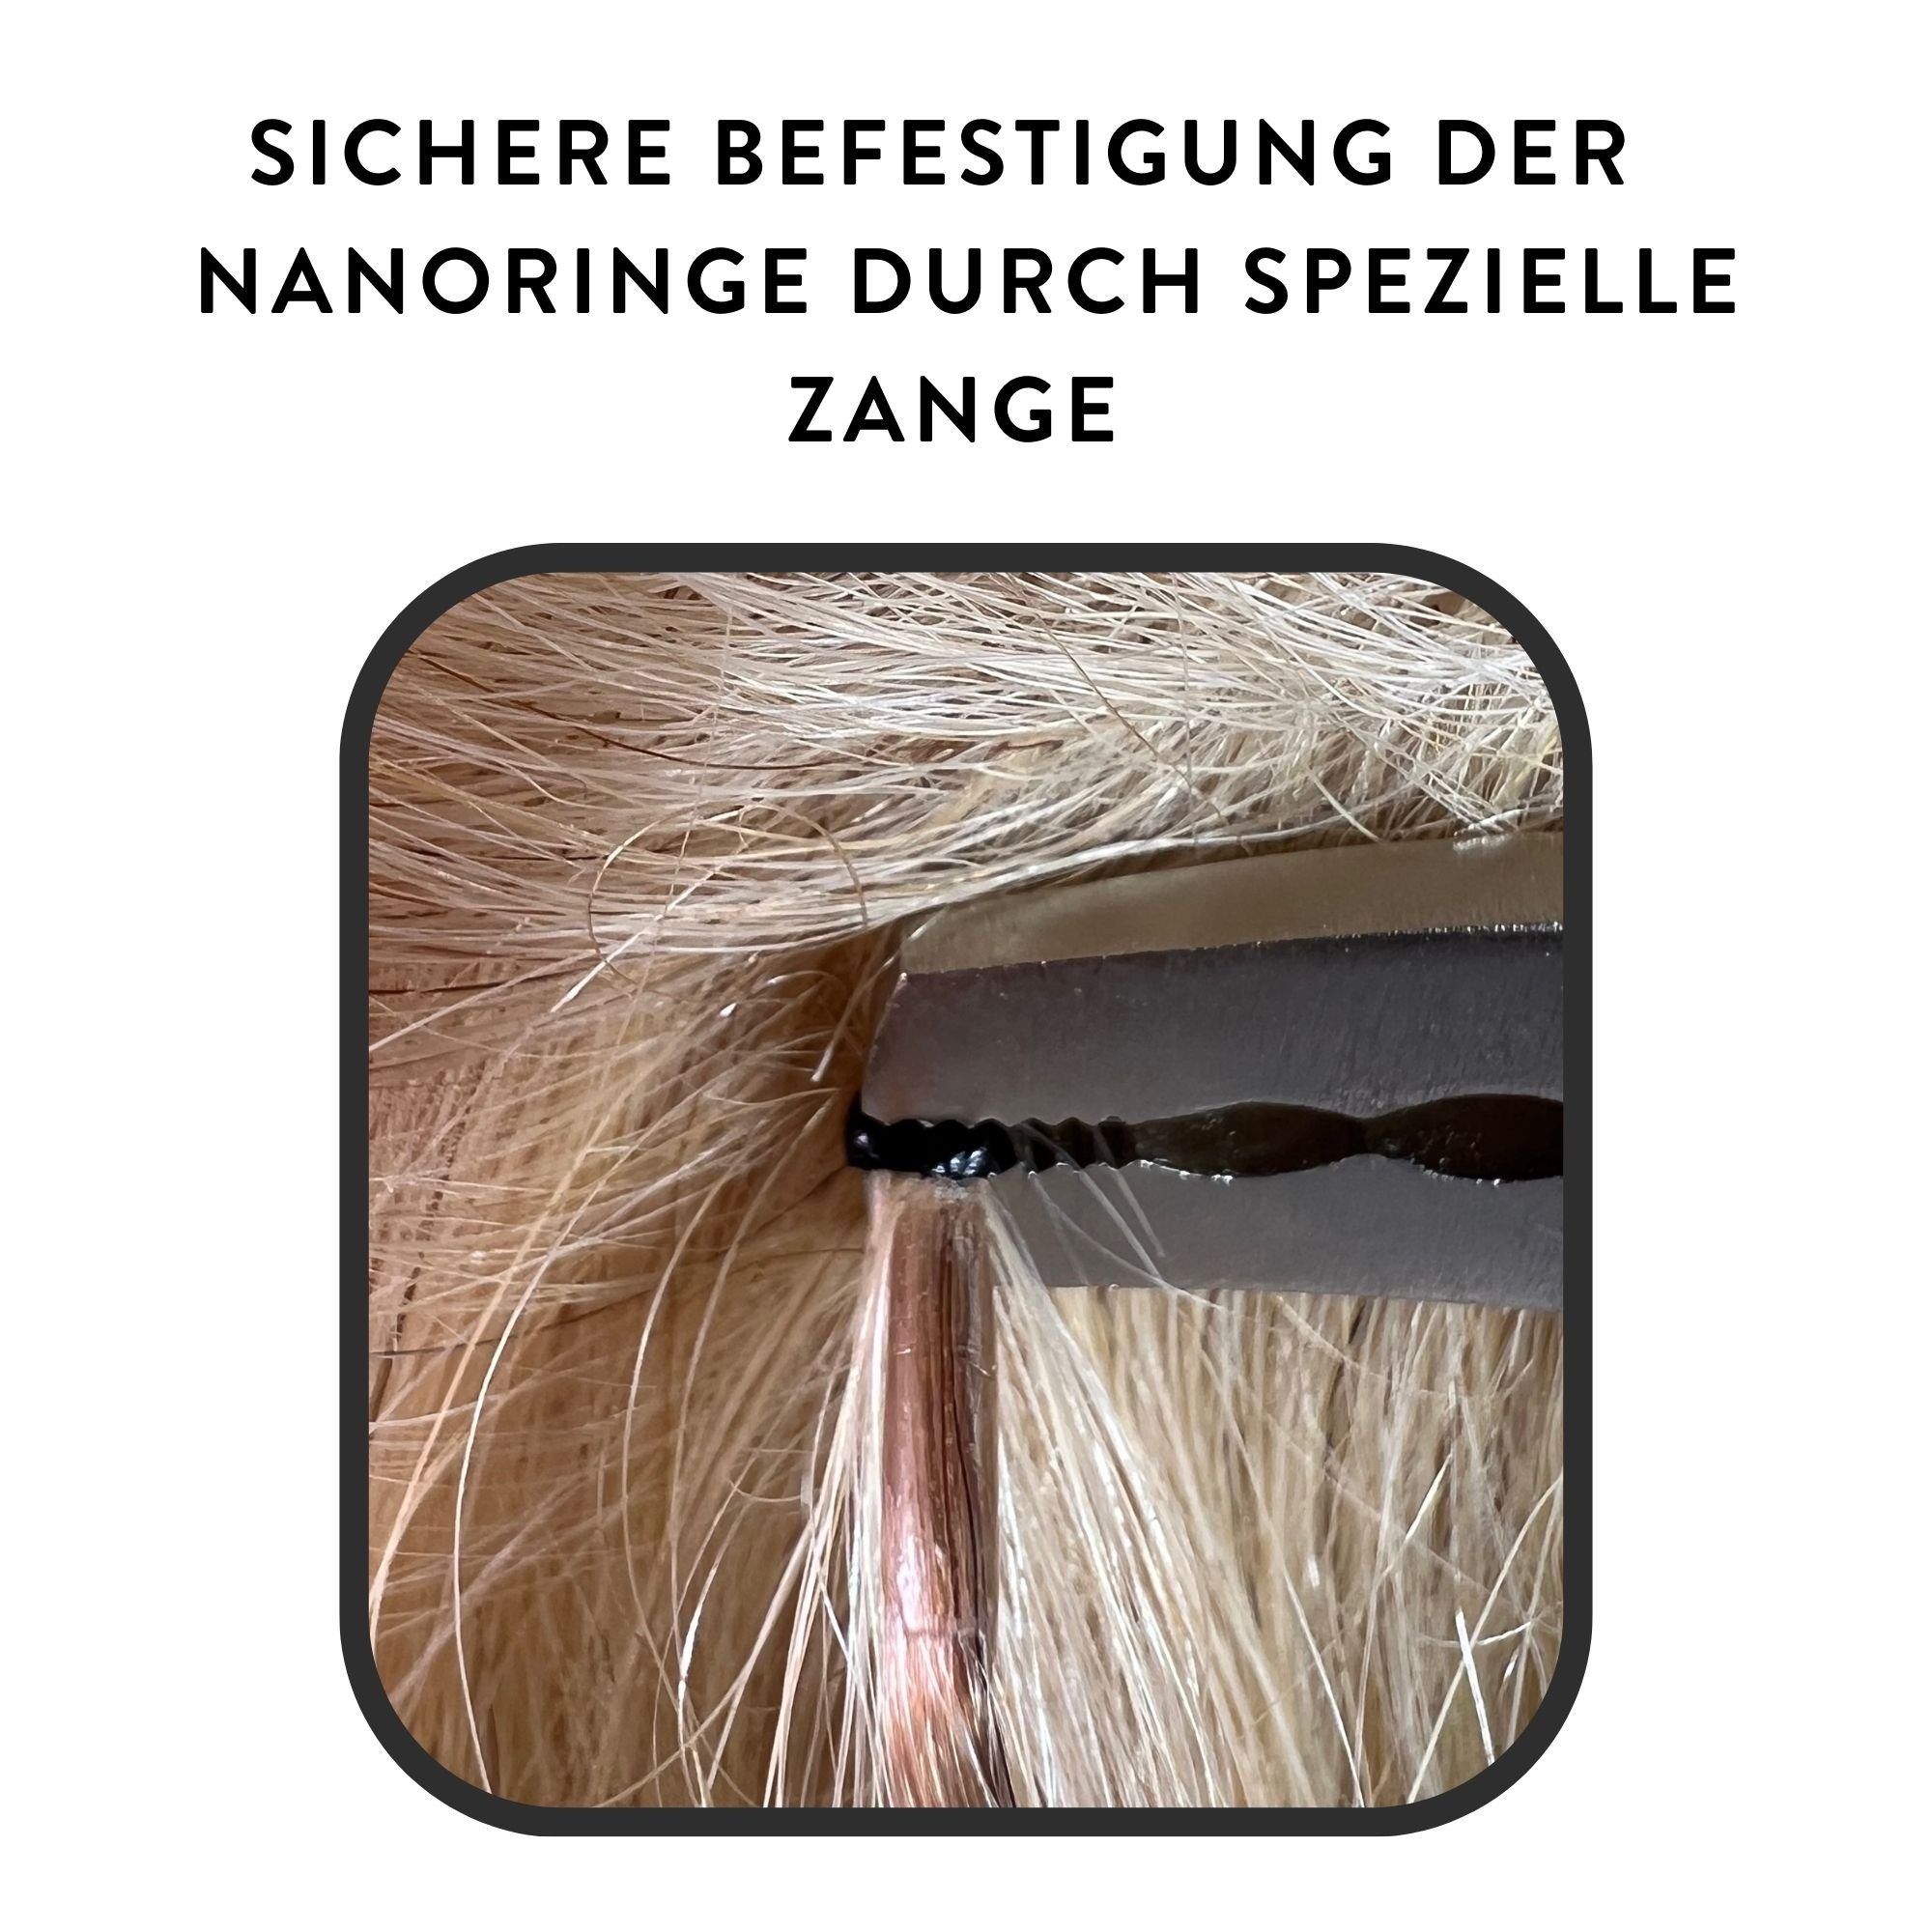 hair2heart mit Nanorings burgundy Silikoneinlage Echthaar-Extension